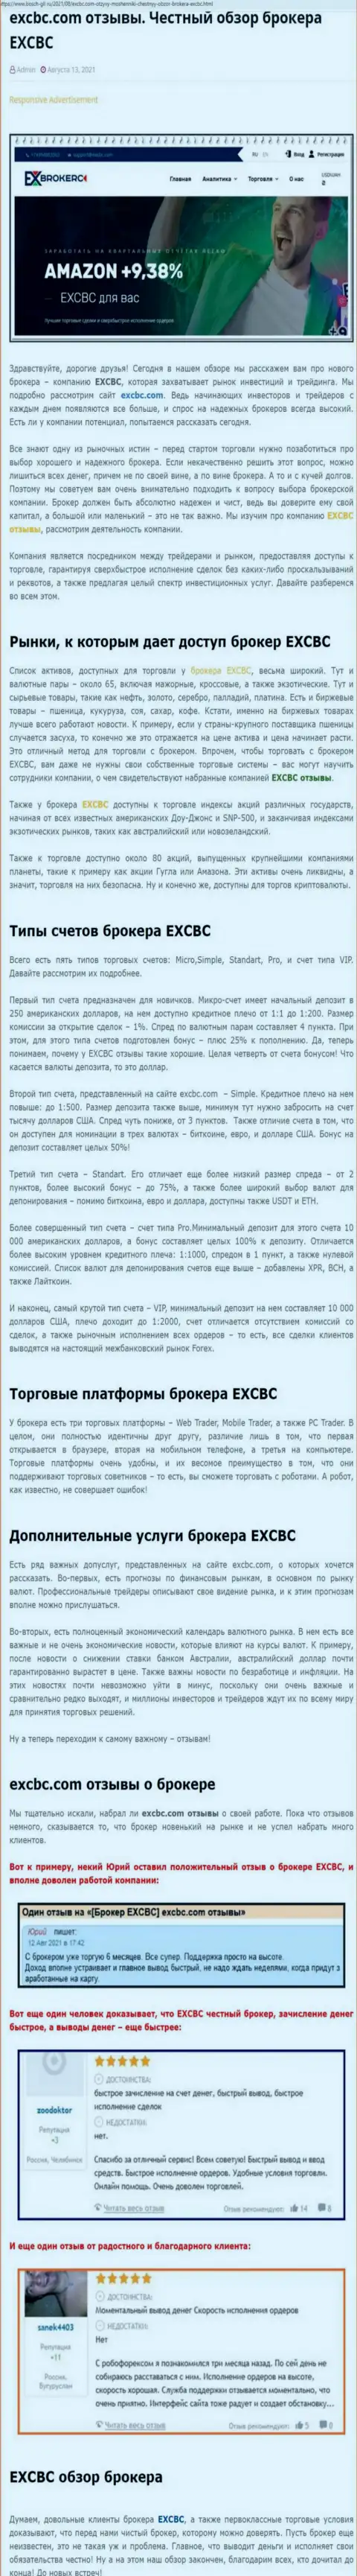 Объективный анализ forex дилингового центра ЕХ Брокерс на сайте bosch gll ru